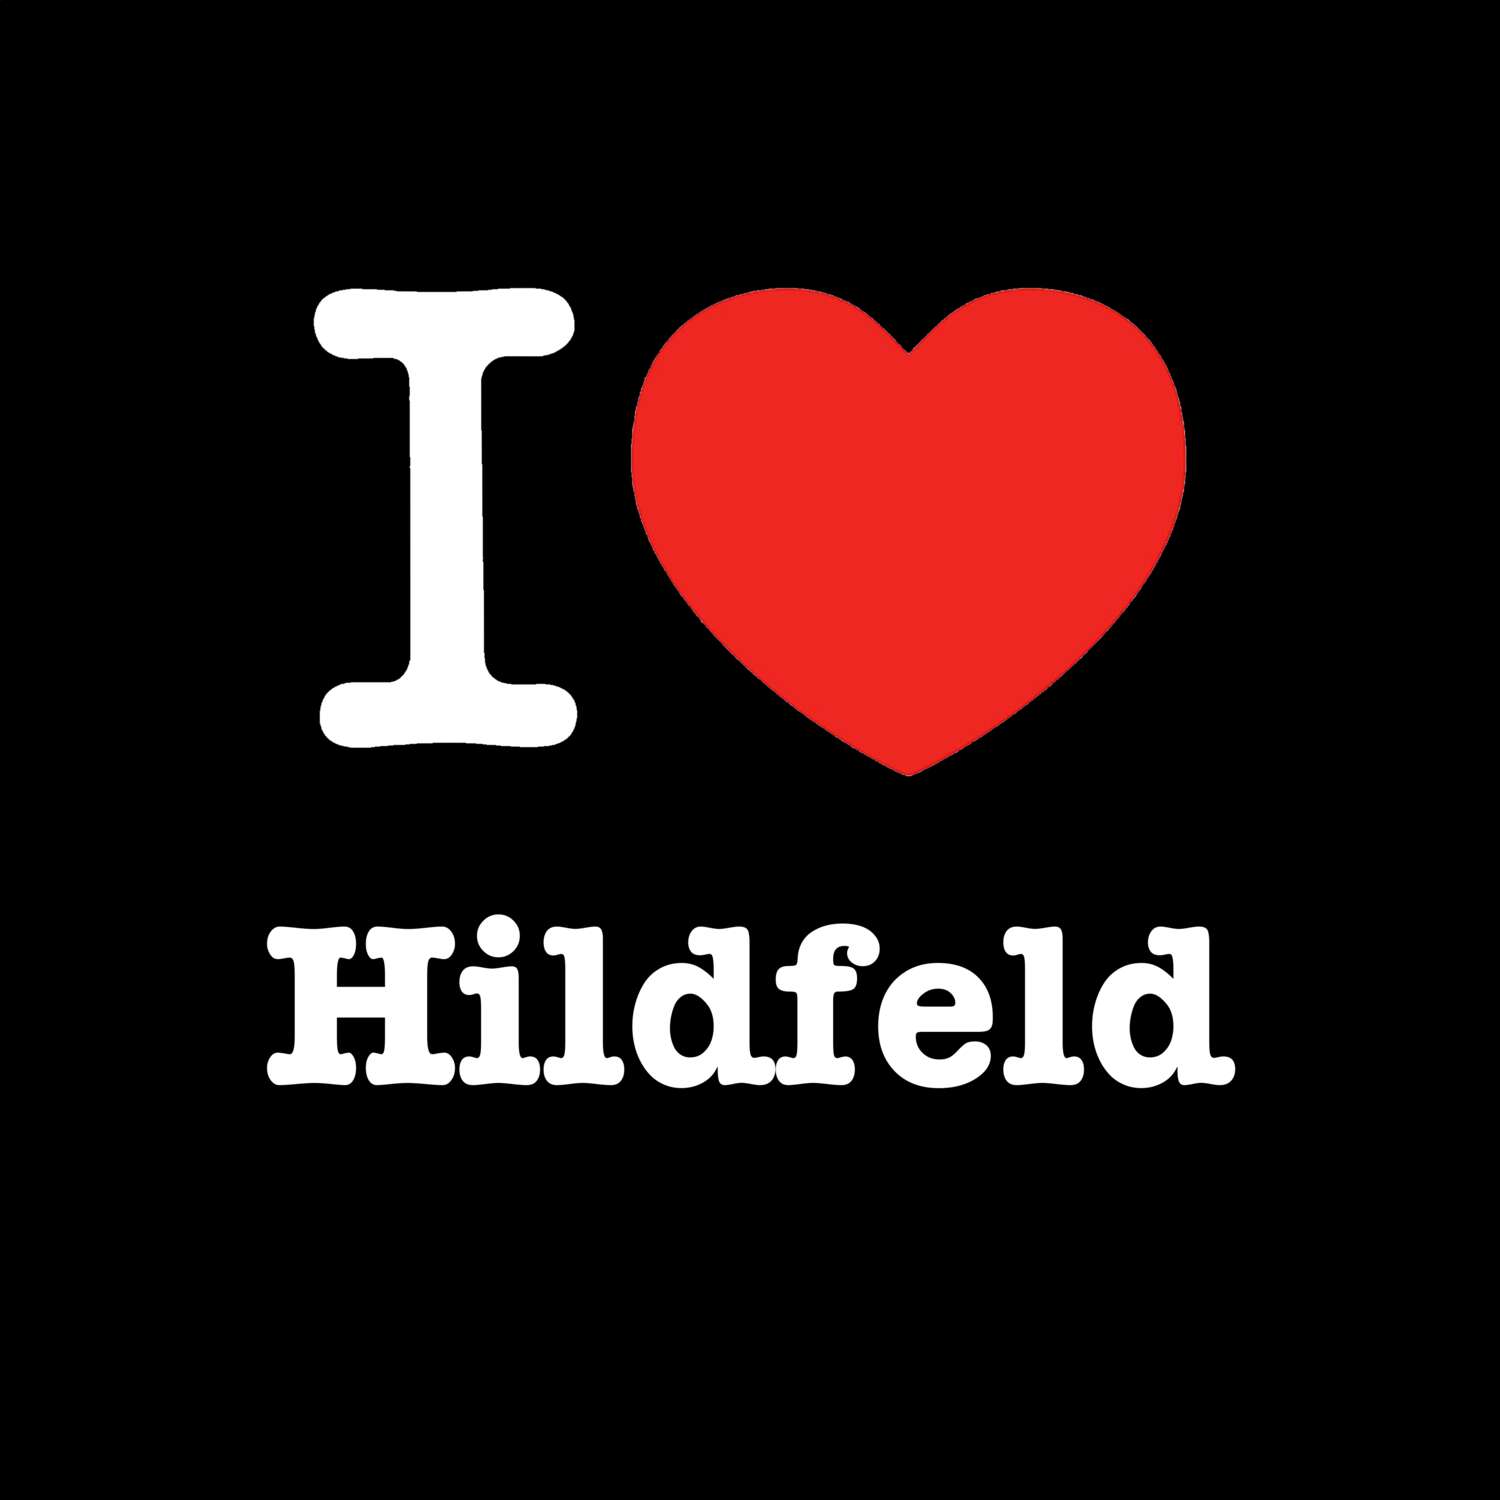 Hildfeld T-Shirt »I love«